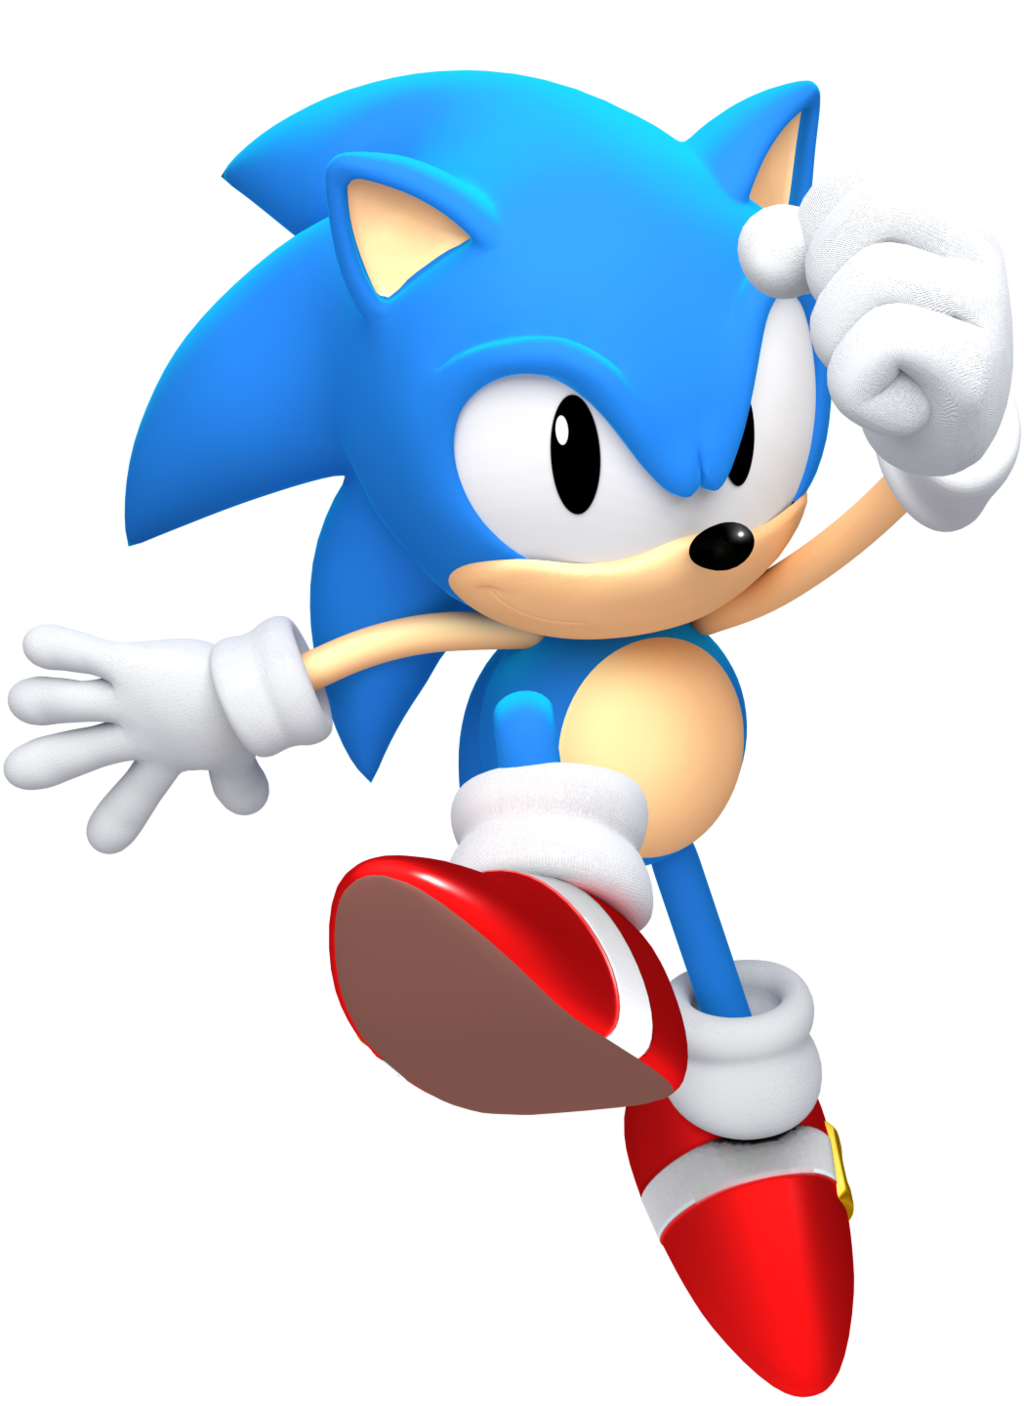 Sonic the Hedgehog (Classic) | VS Battles Wiki | FANDOM powered by Wikia